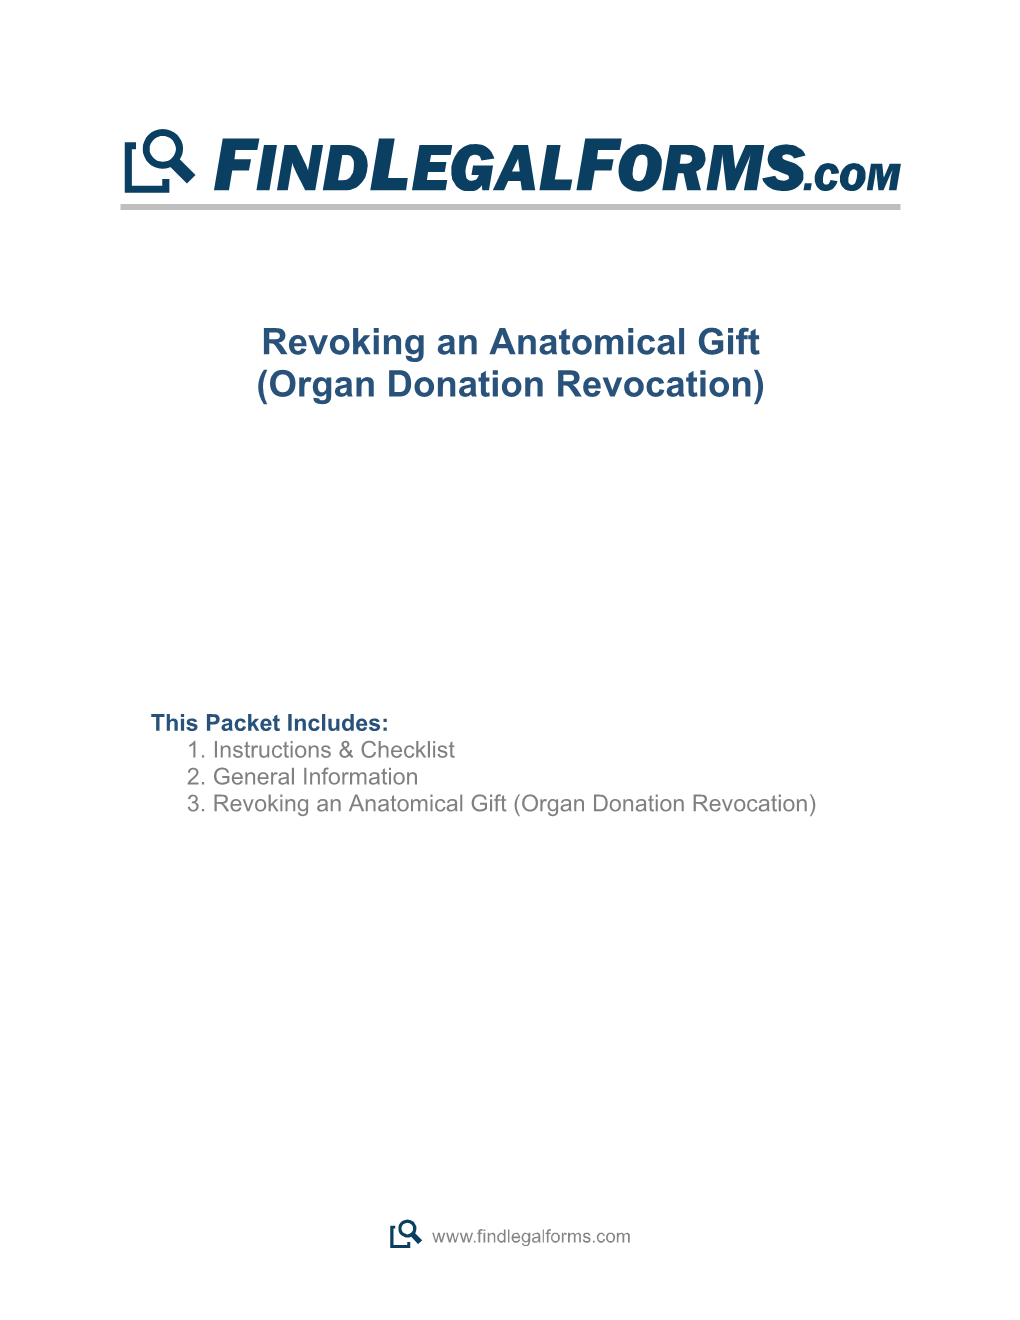 Revoking an Anatomical Gift (Organ Donation Revocation)